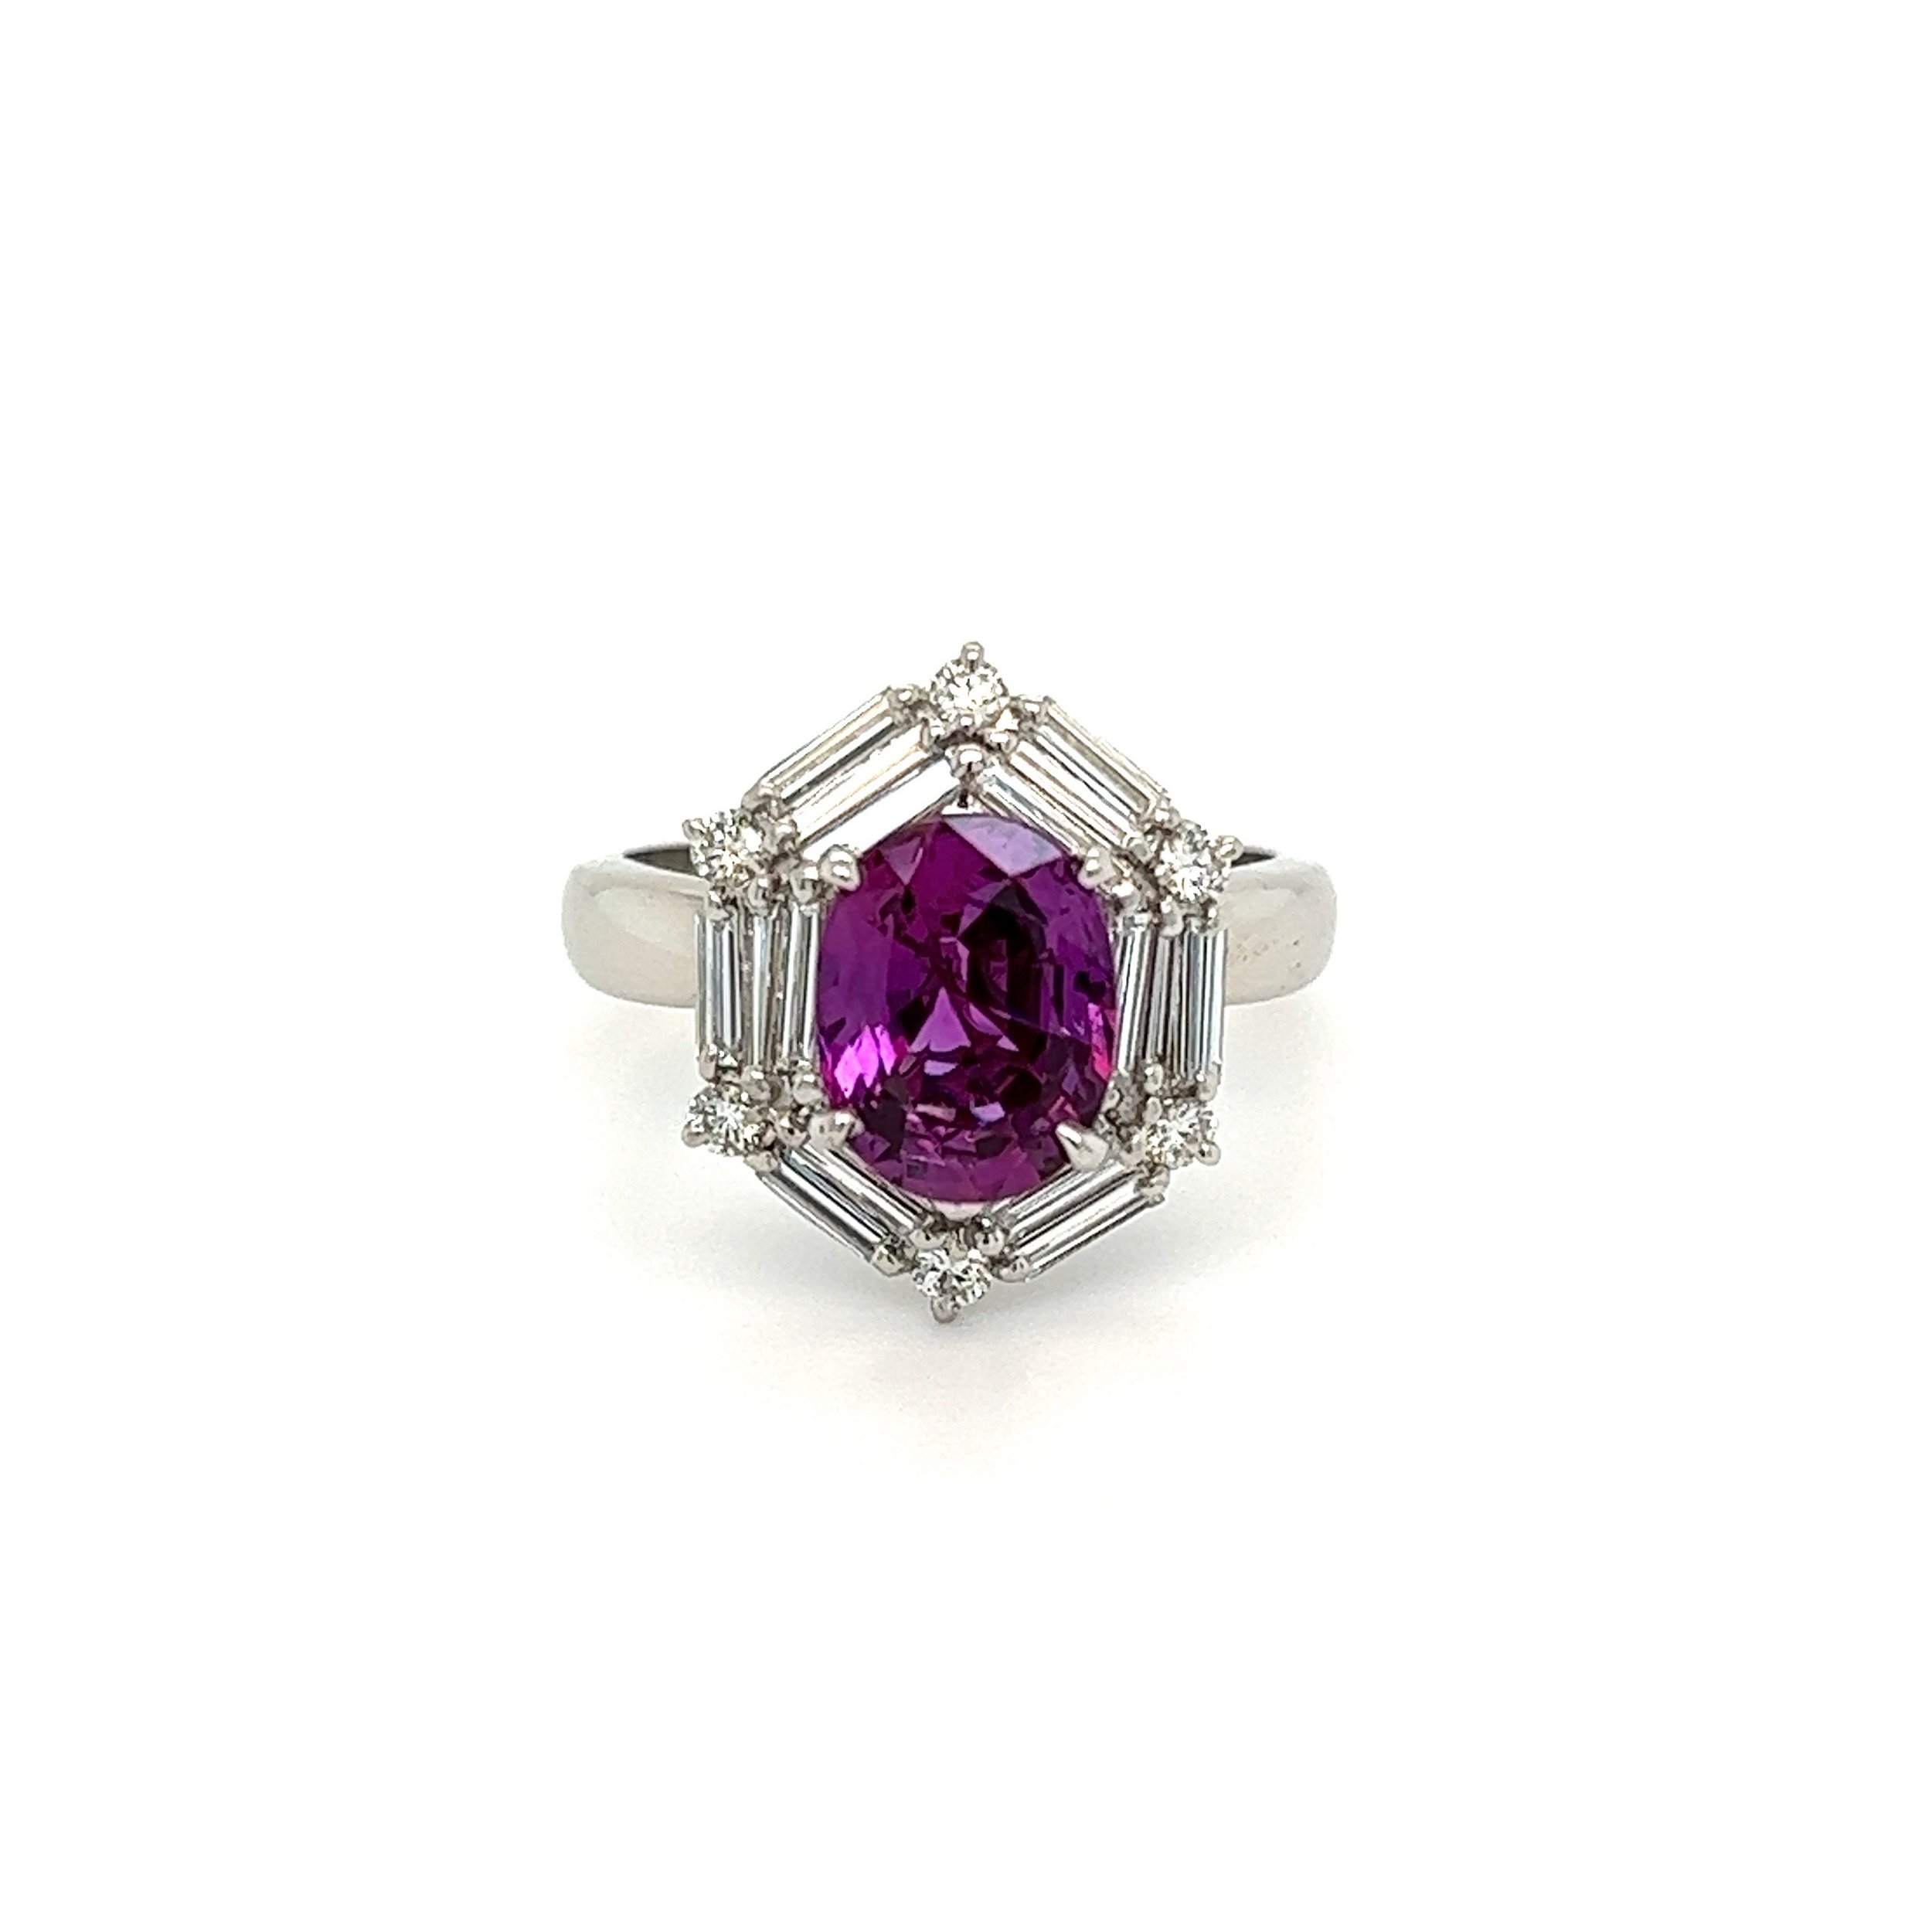 Platinum 2.30ct Oval Purple Sapphire GIA & .64tcw Baguette & Round Diamond Ring 6.0g, s6.25